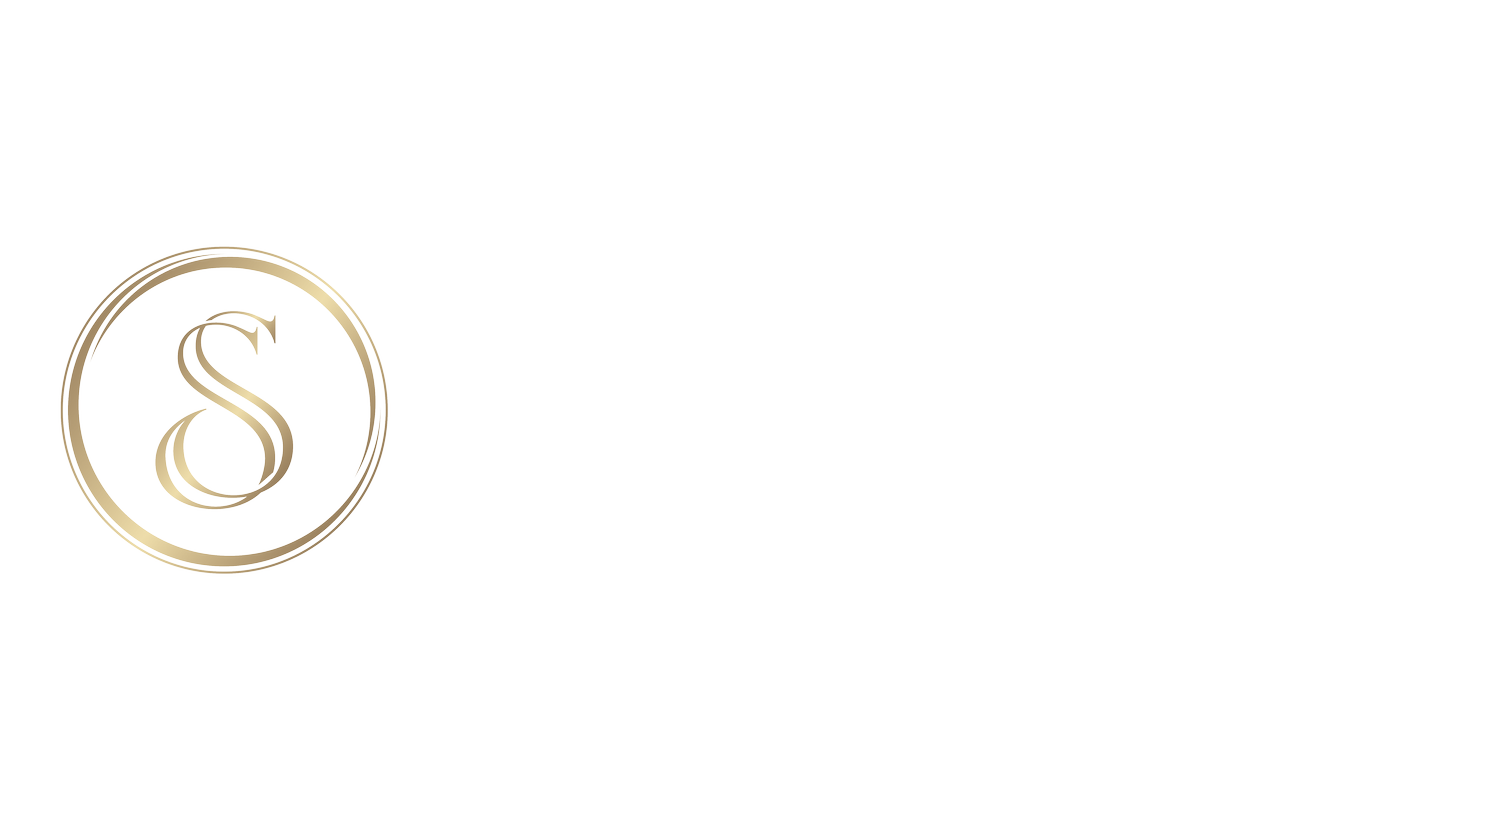 Sydney Sherman Photography 